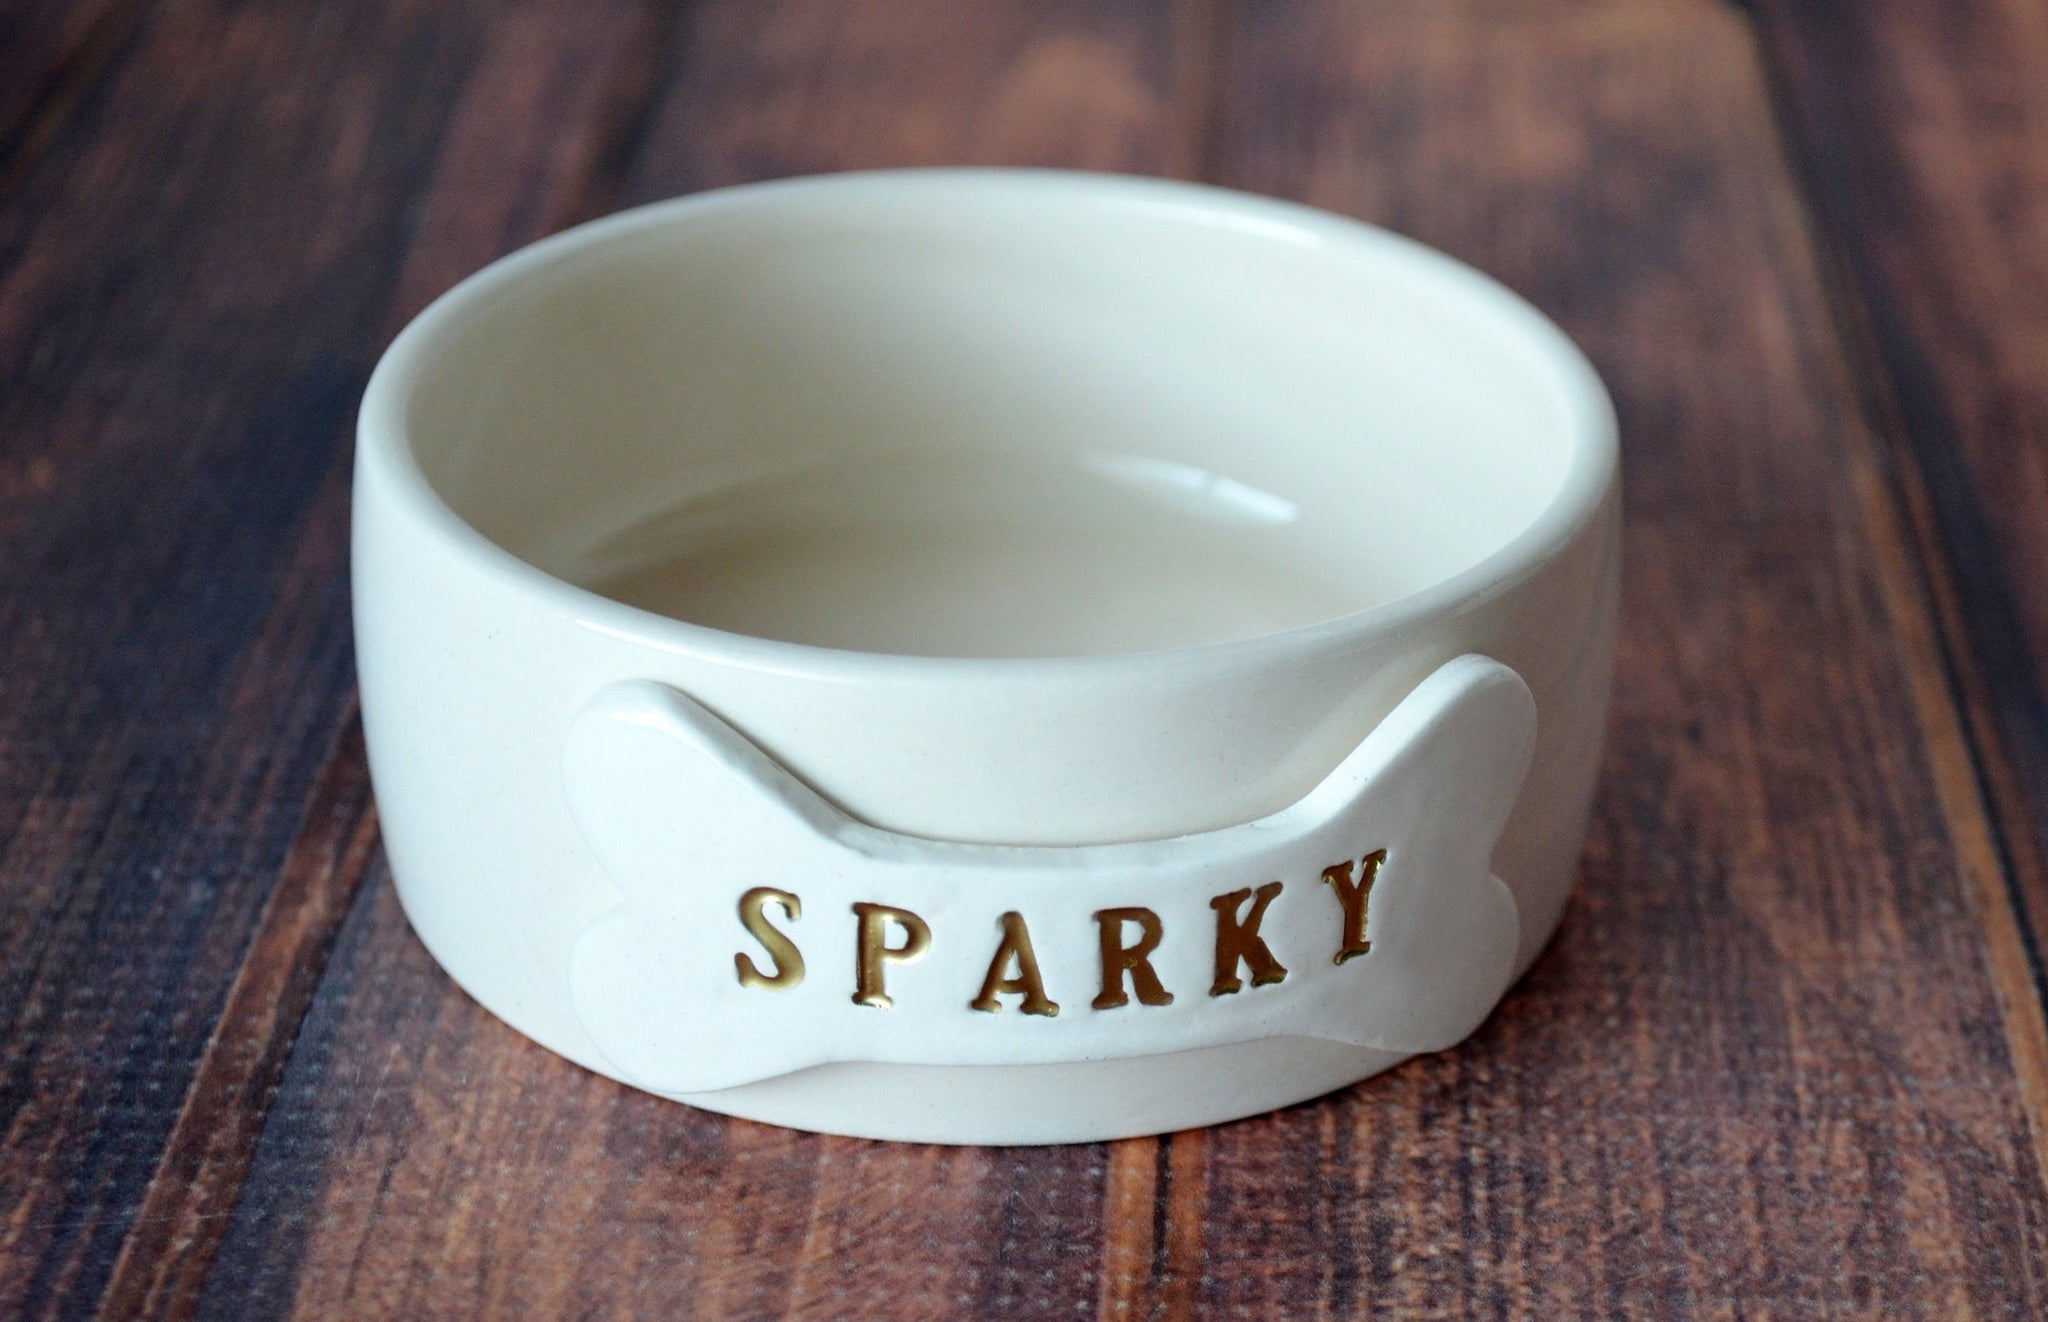 cheap personalized dog bowls